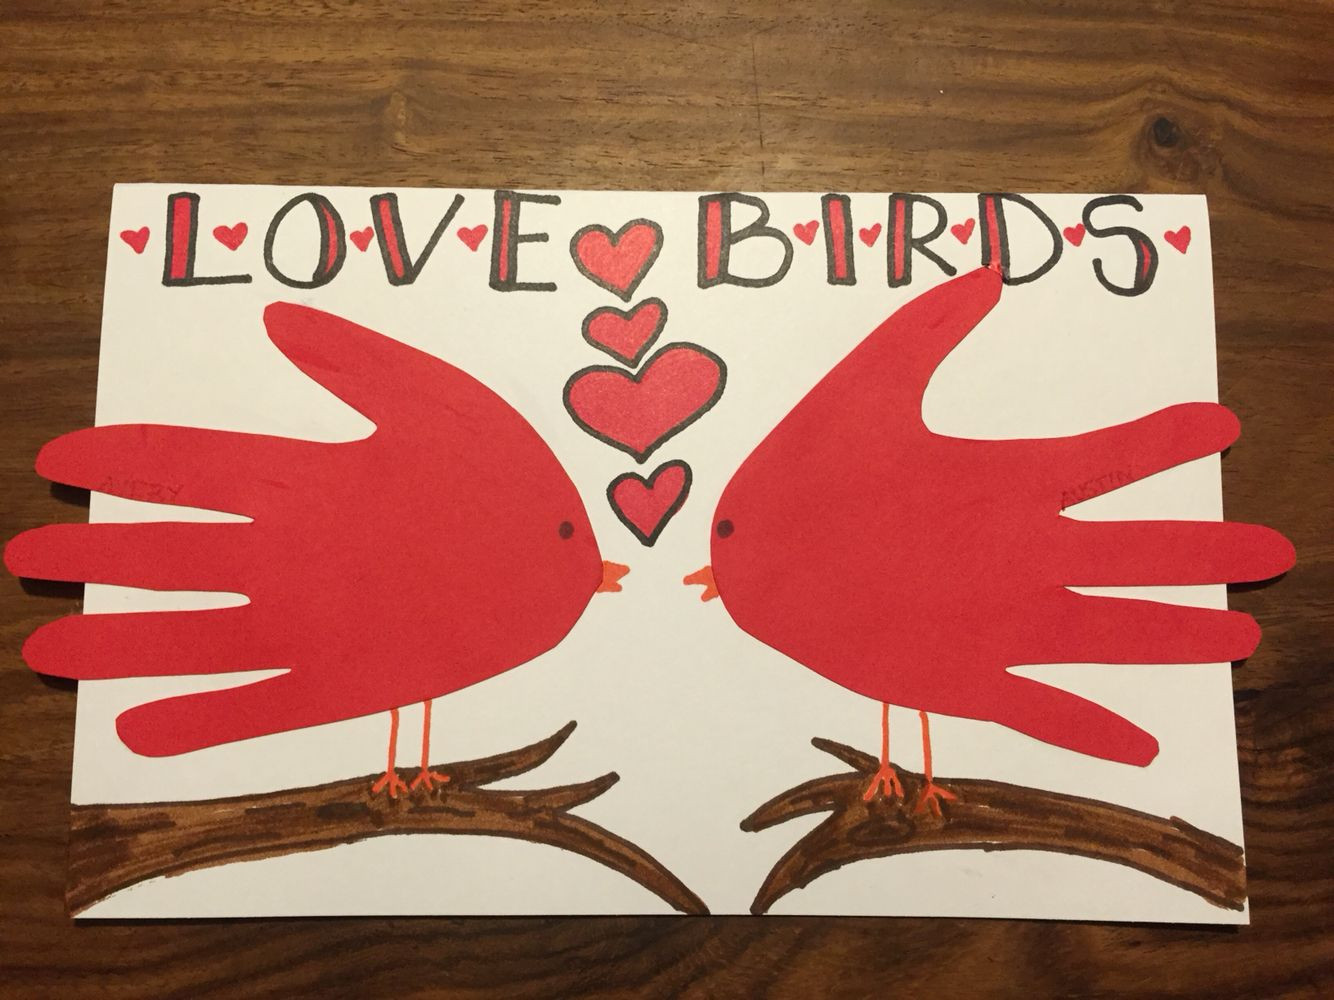 Diy Anniversary Gift Ideas For Parents
 Lovebirds handprint birds Valentine s Day or anniversary